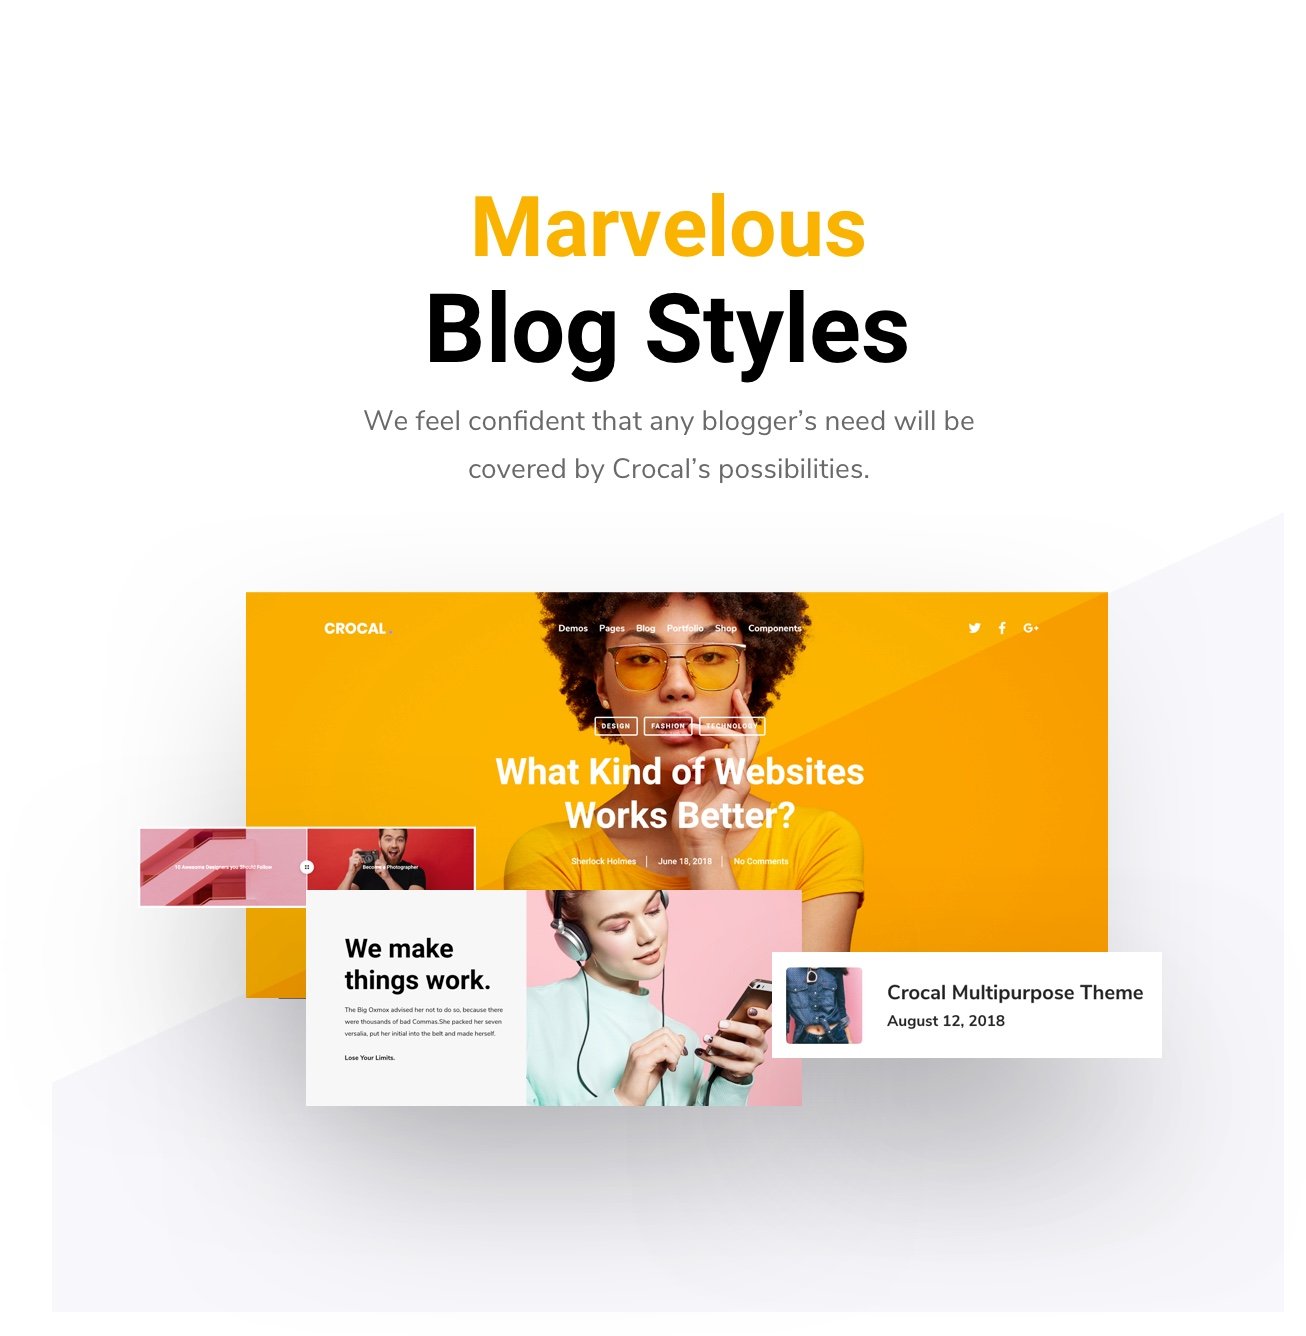 Crocal Blog styles